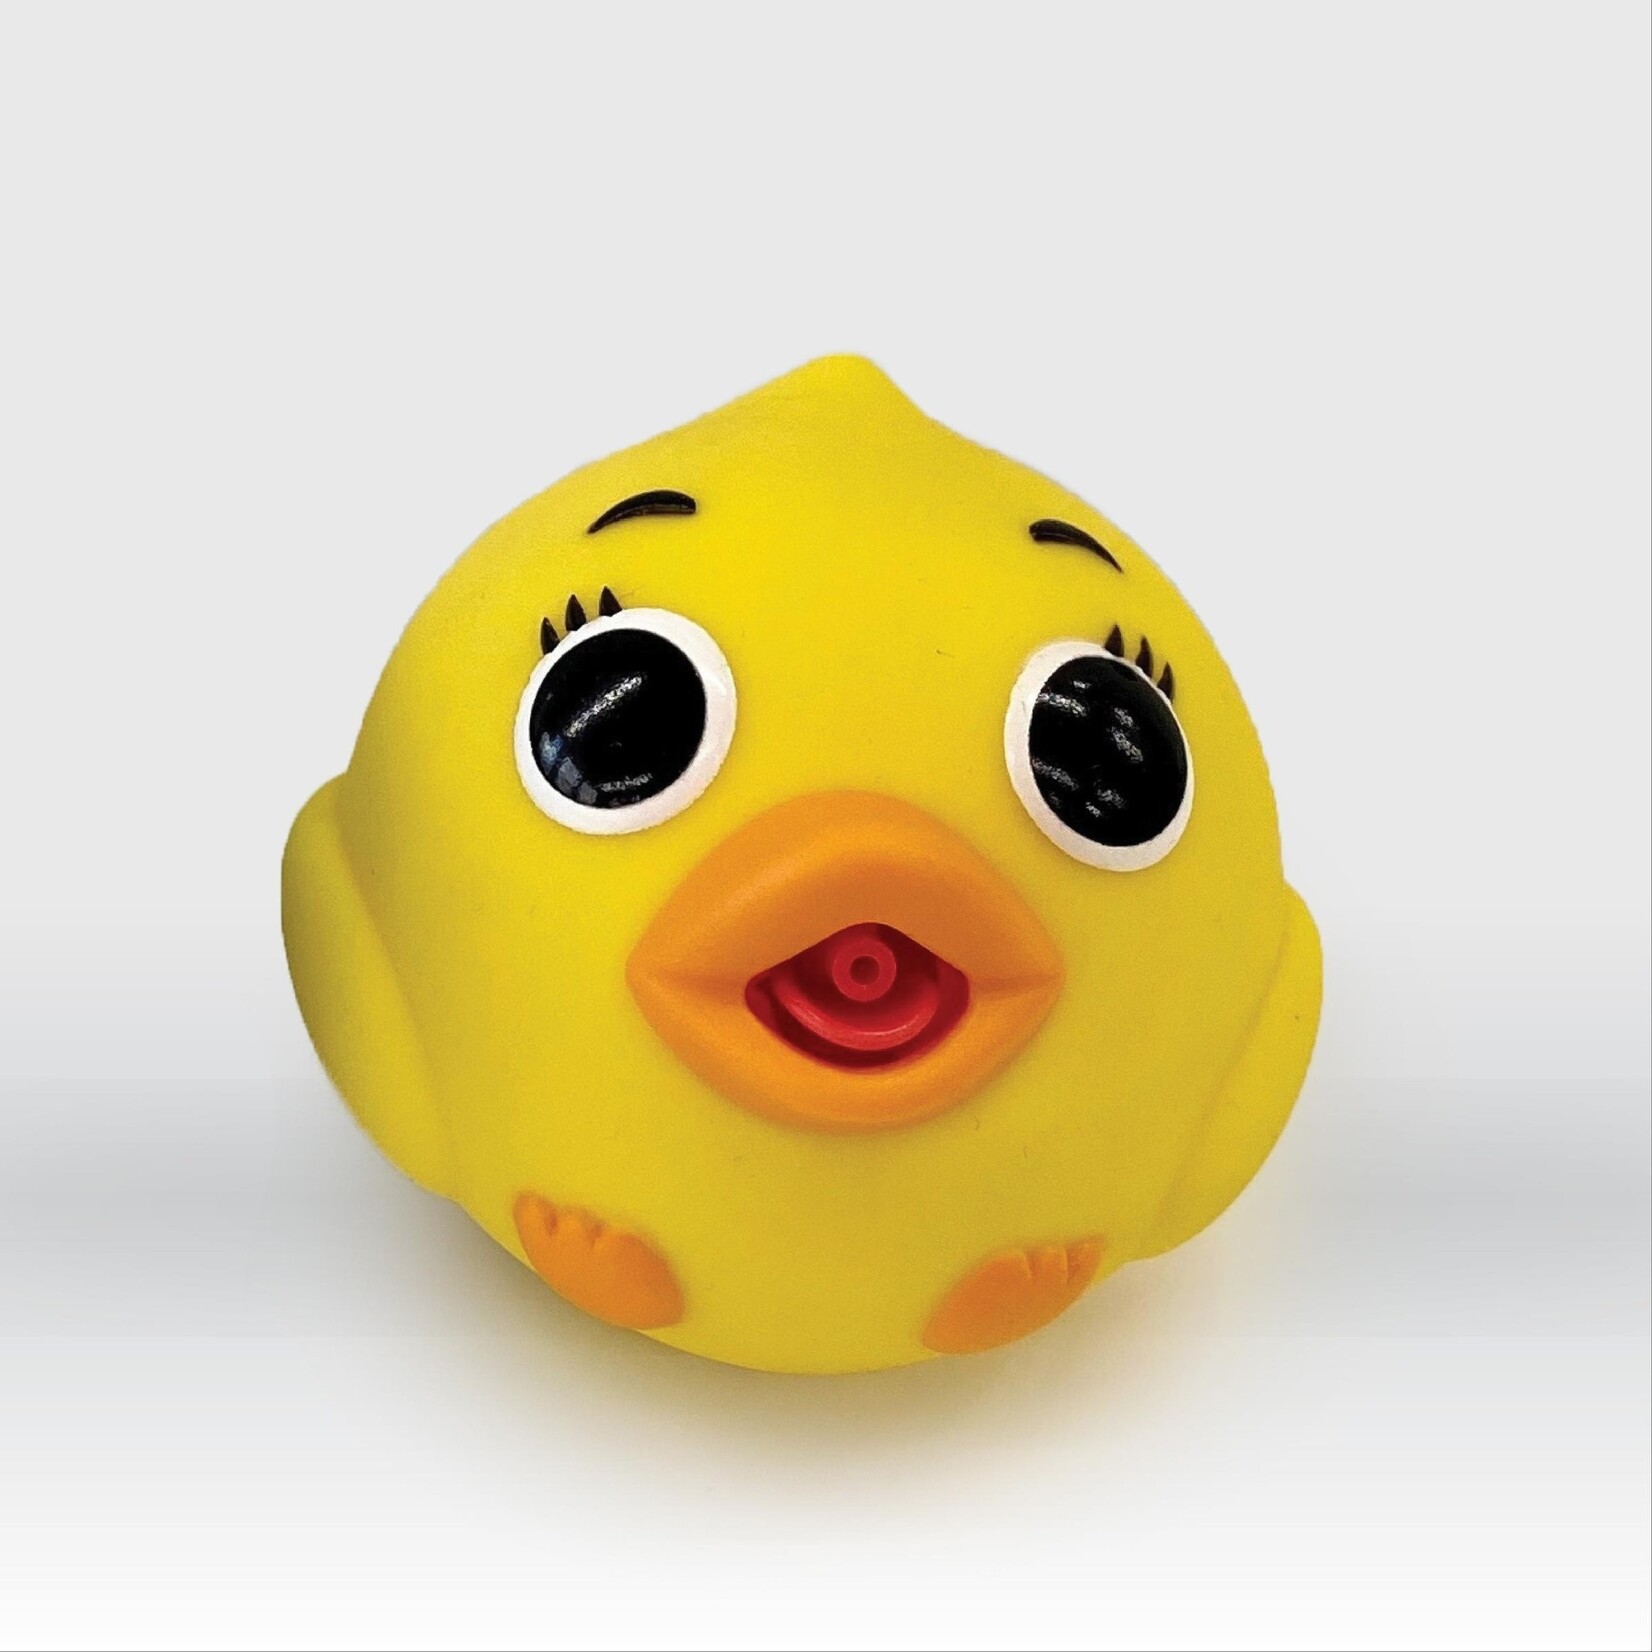 Sankyo Toys/JabberBall Squirbble Duck